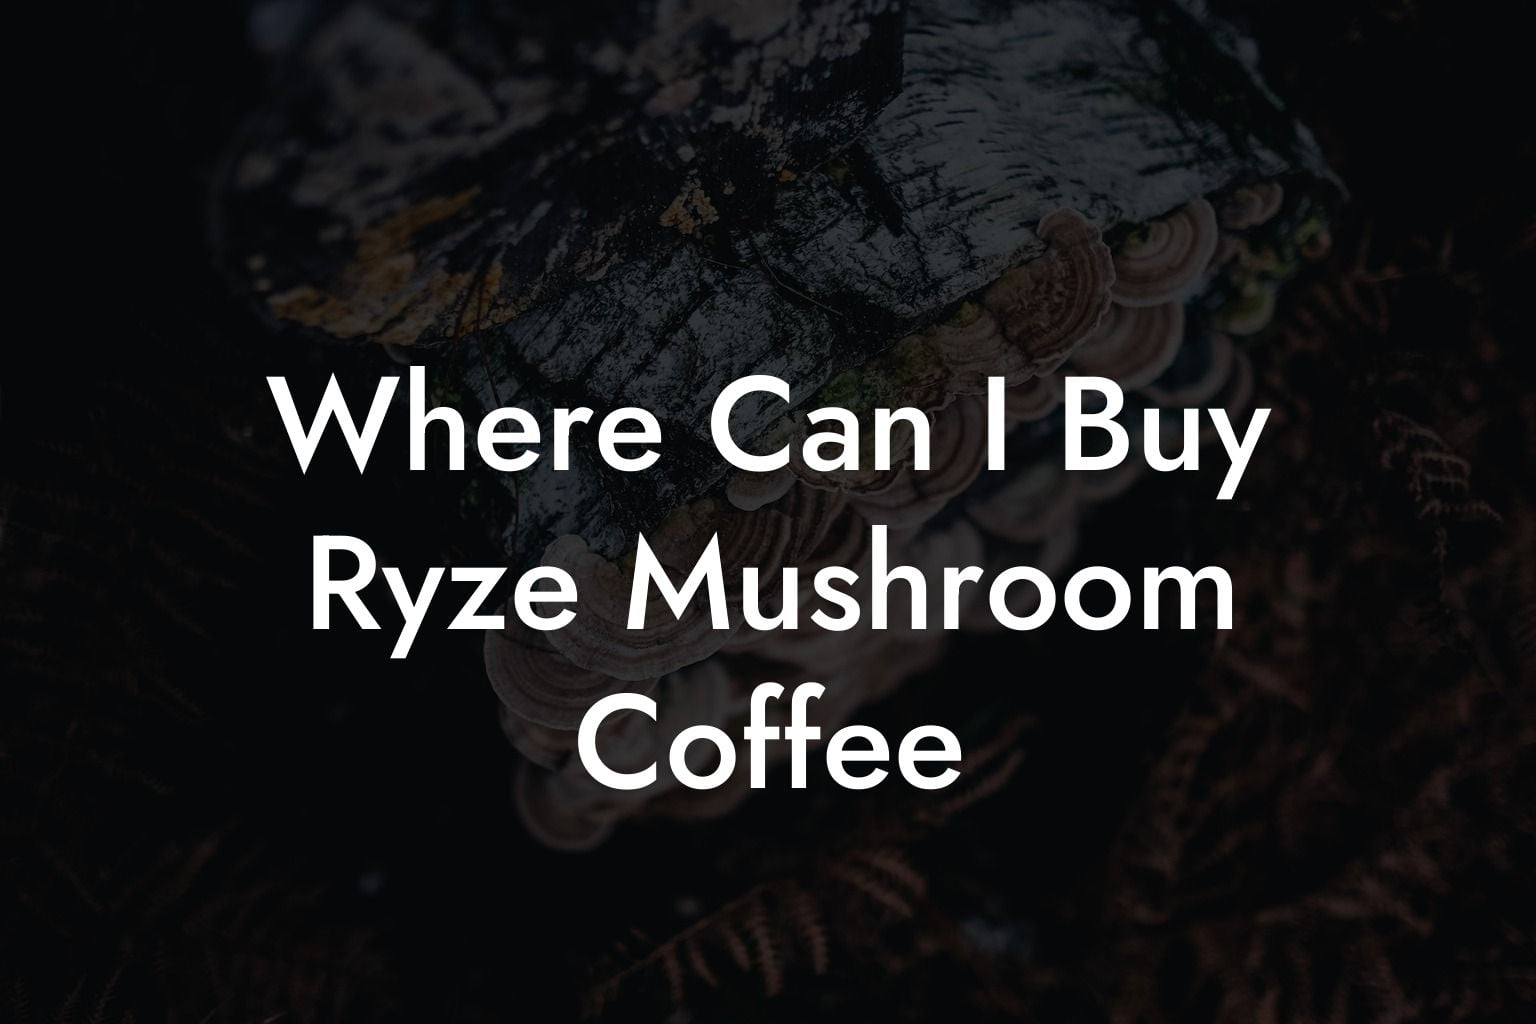 Where Can I Buy Ryze Mushroom Coffee